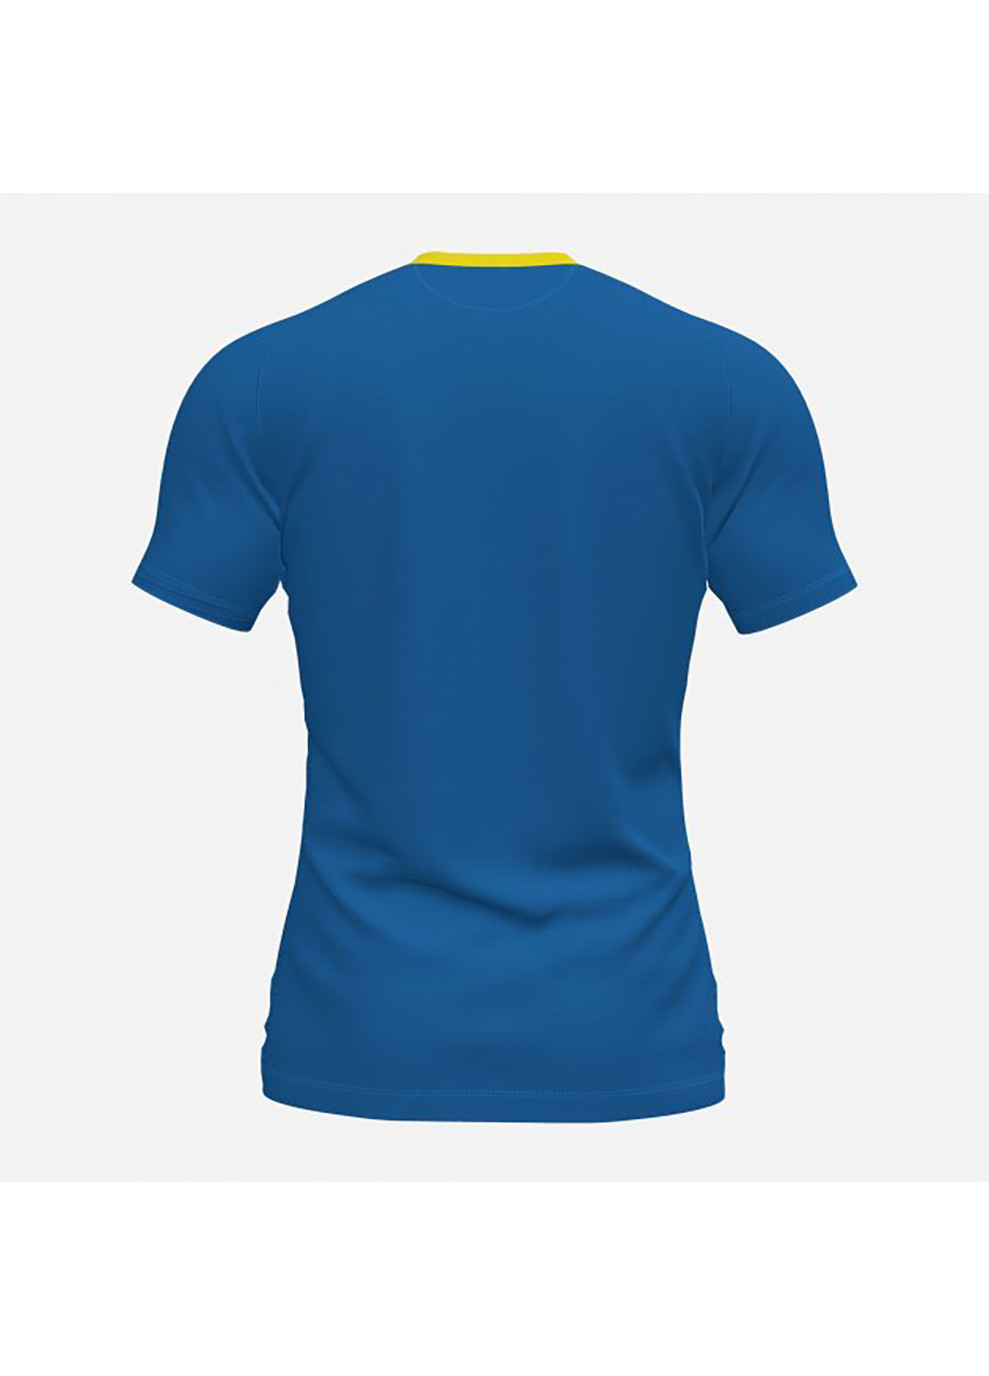 Комбинированная футболка flag ii t-shirt royal-yellow s/s желтый,синий 101465bv.709 Joma